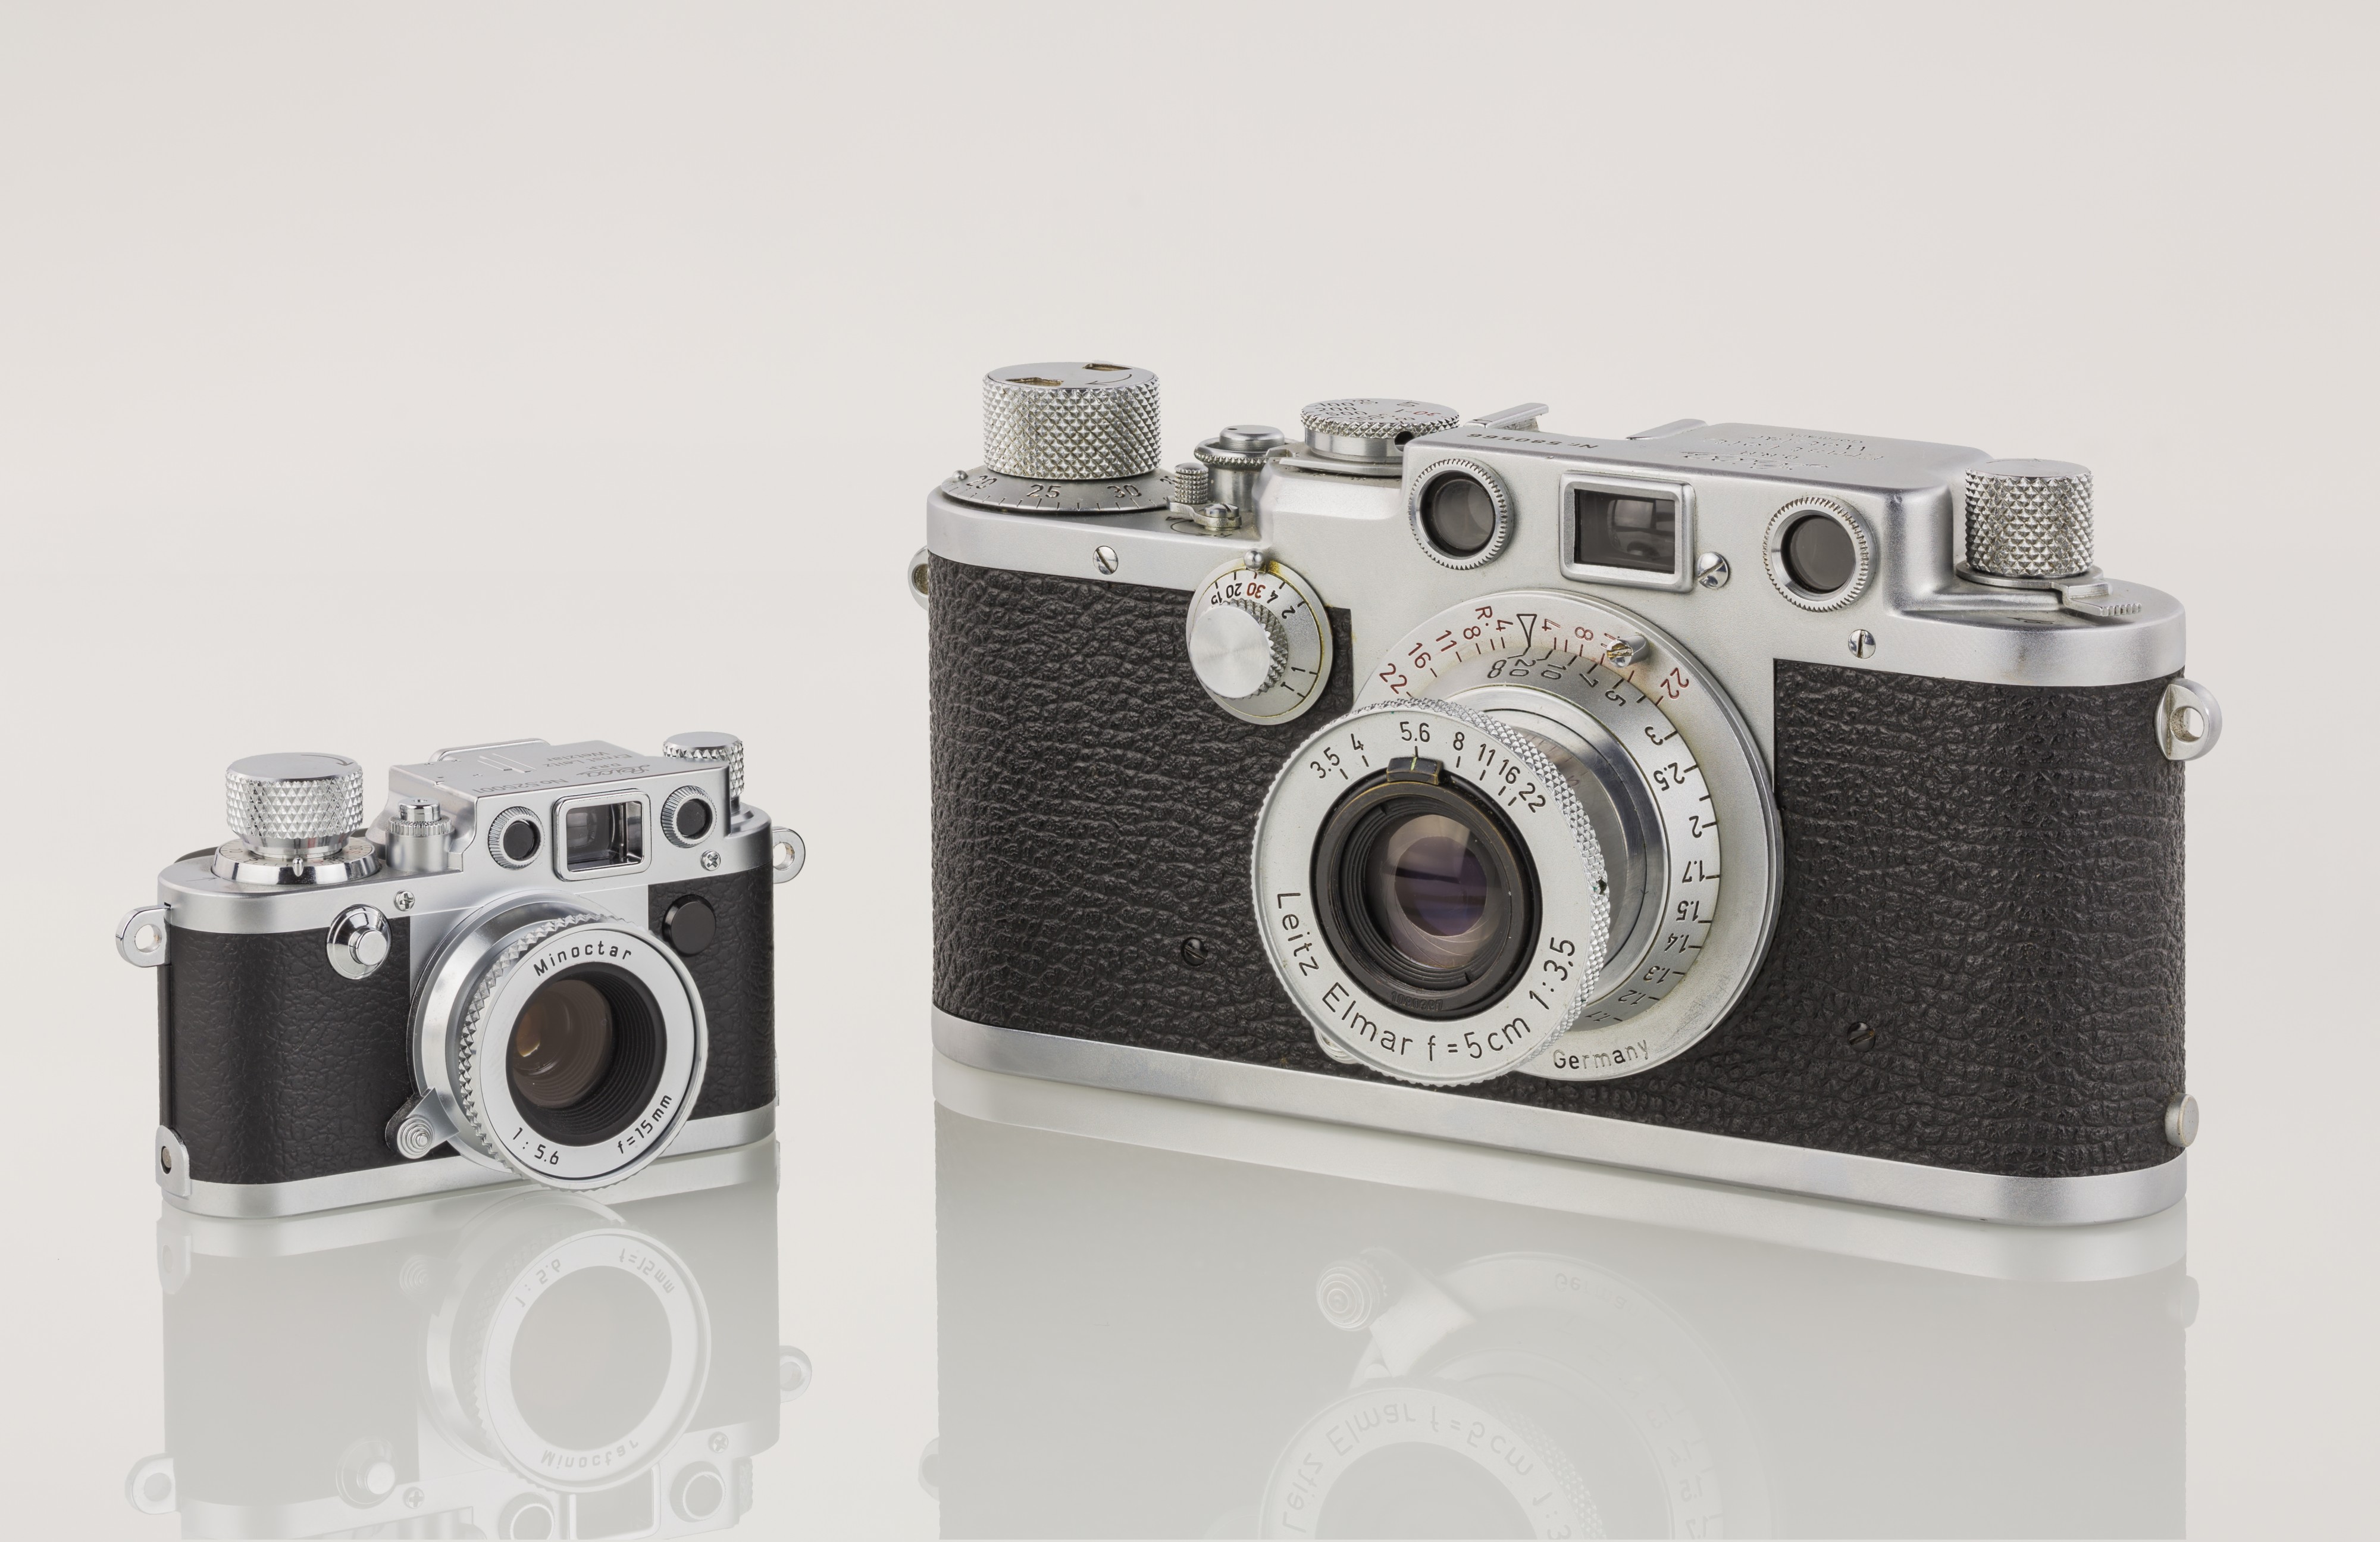 LEI0440 190 Leica IIIf chrom - Sn. 580566 1951-52-M39 vs. Minox Leica IIIf O-6097 hf